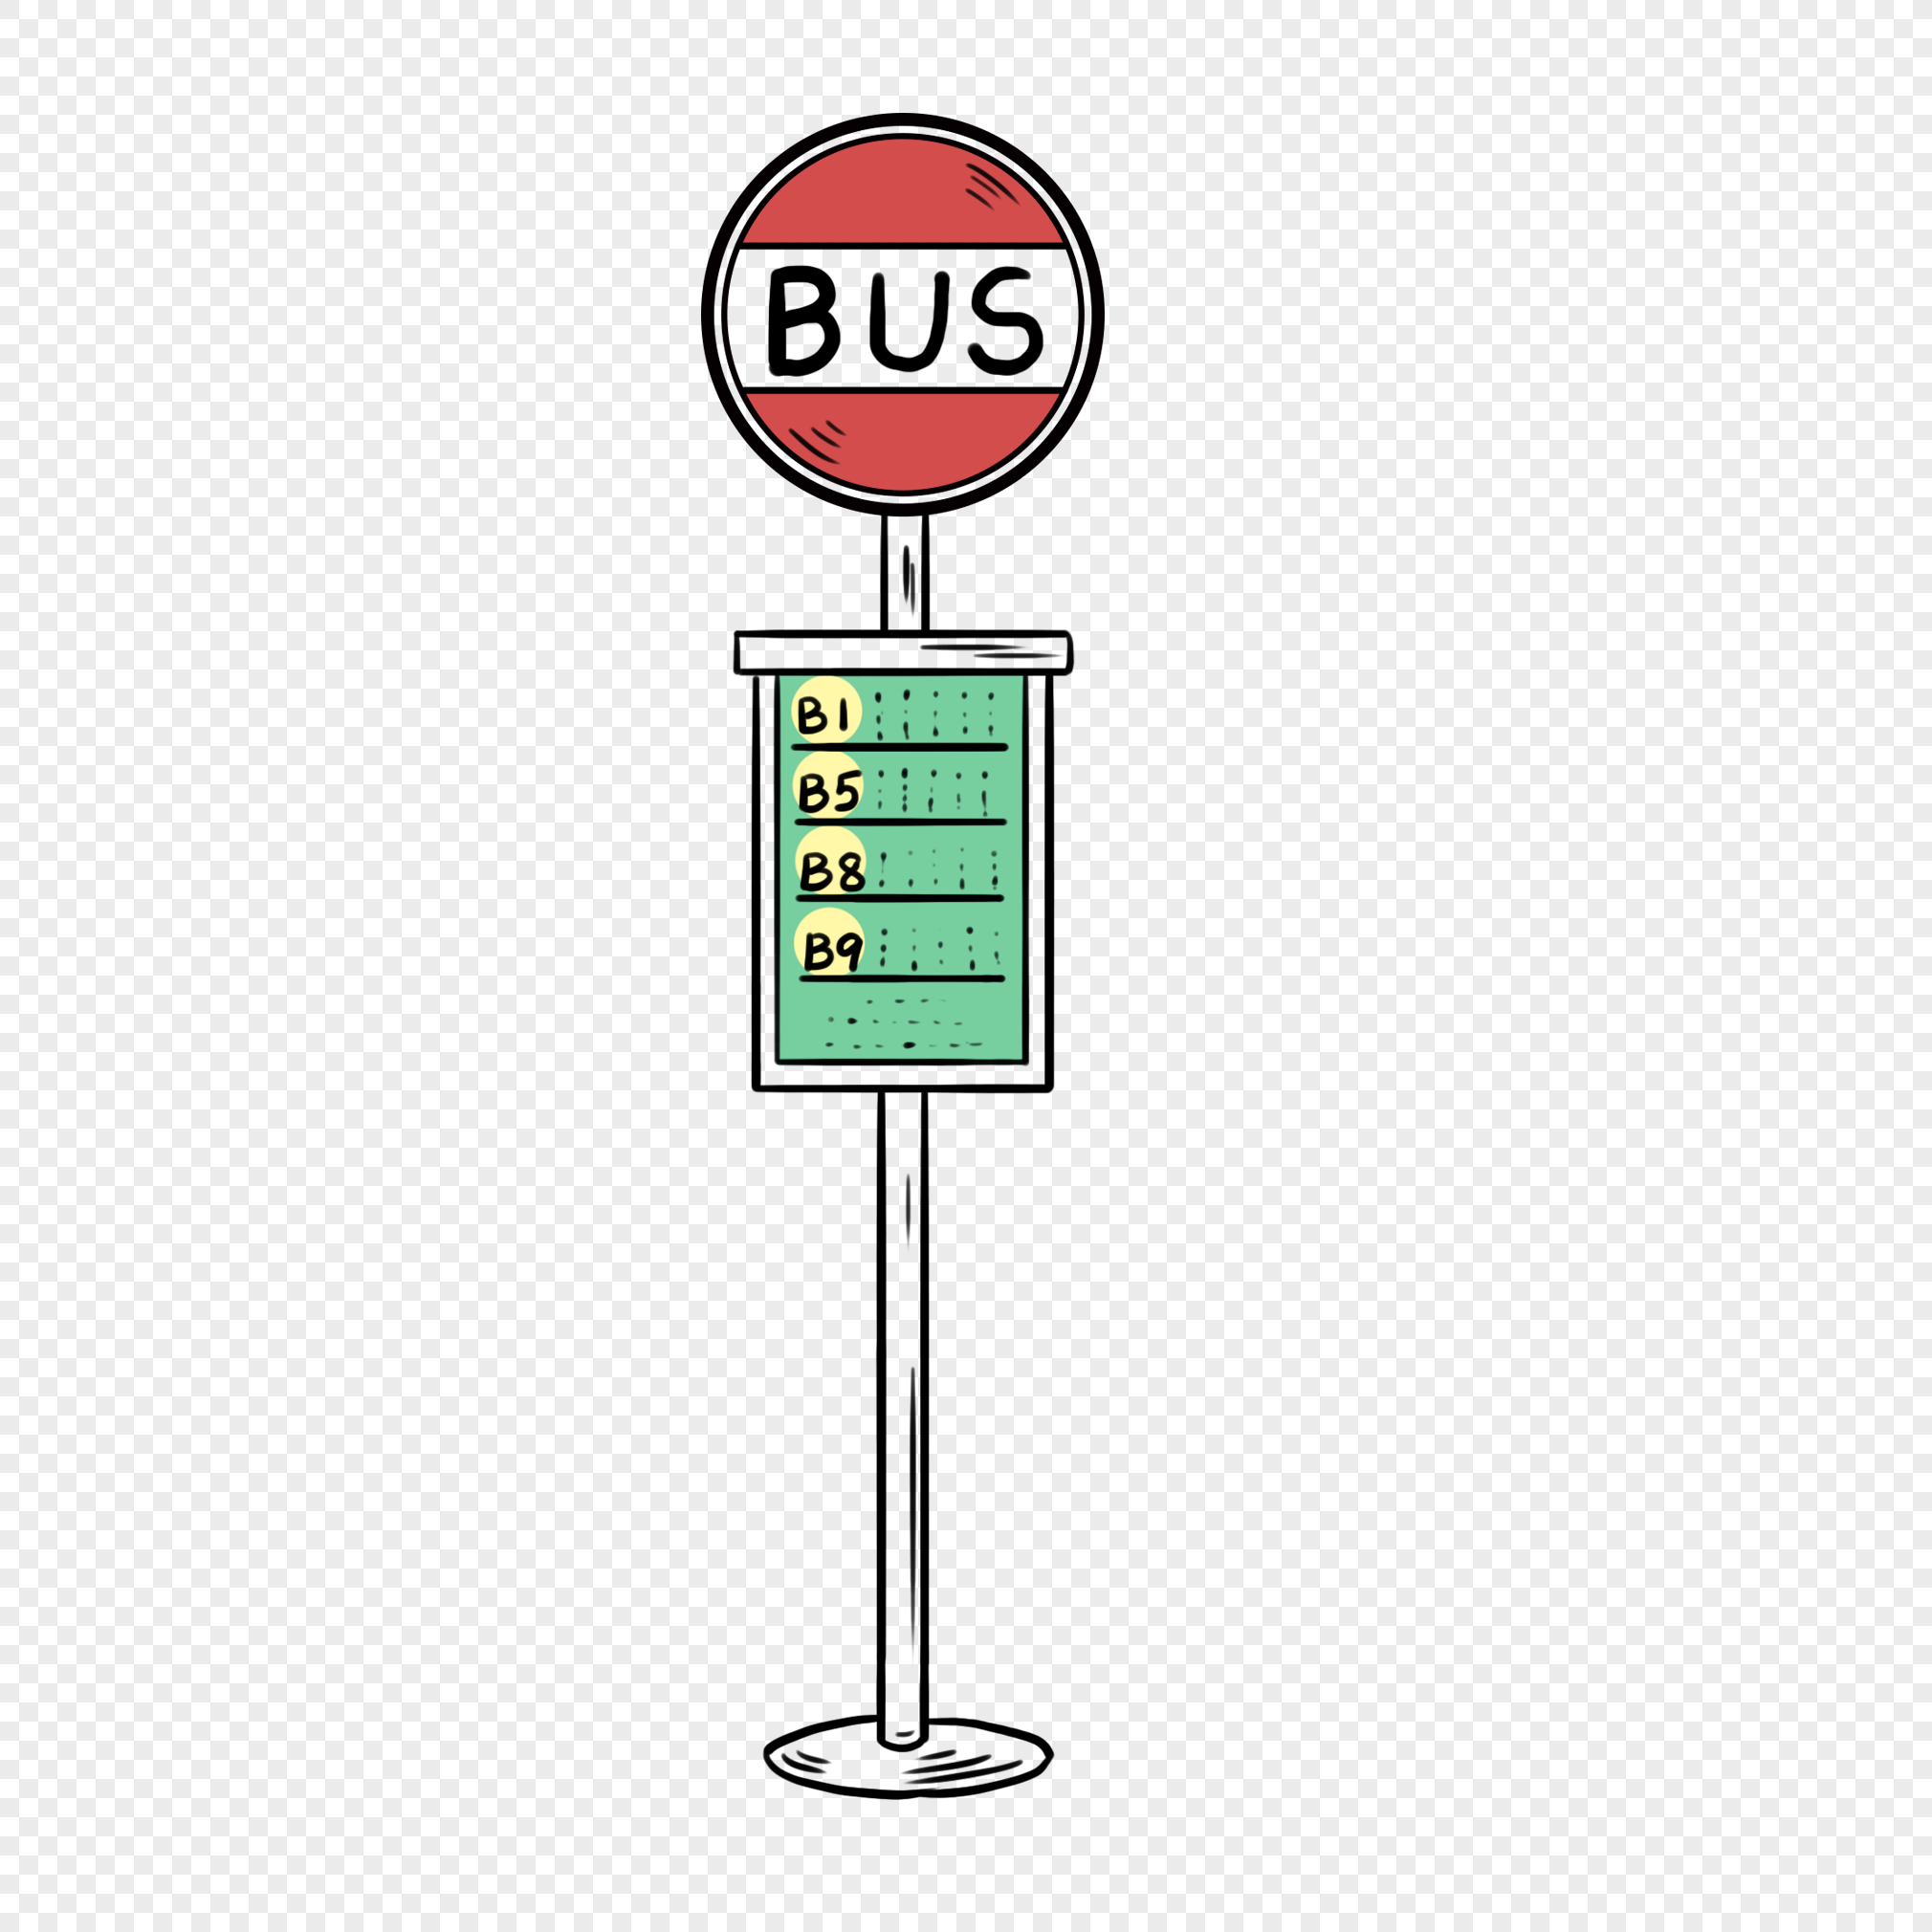 Bus stop stick figure, bus stop sign, line, bus sign png hd transparent image